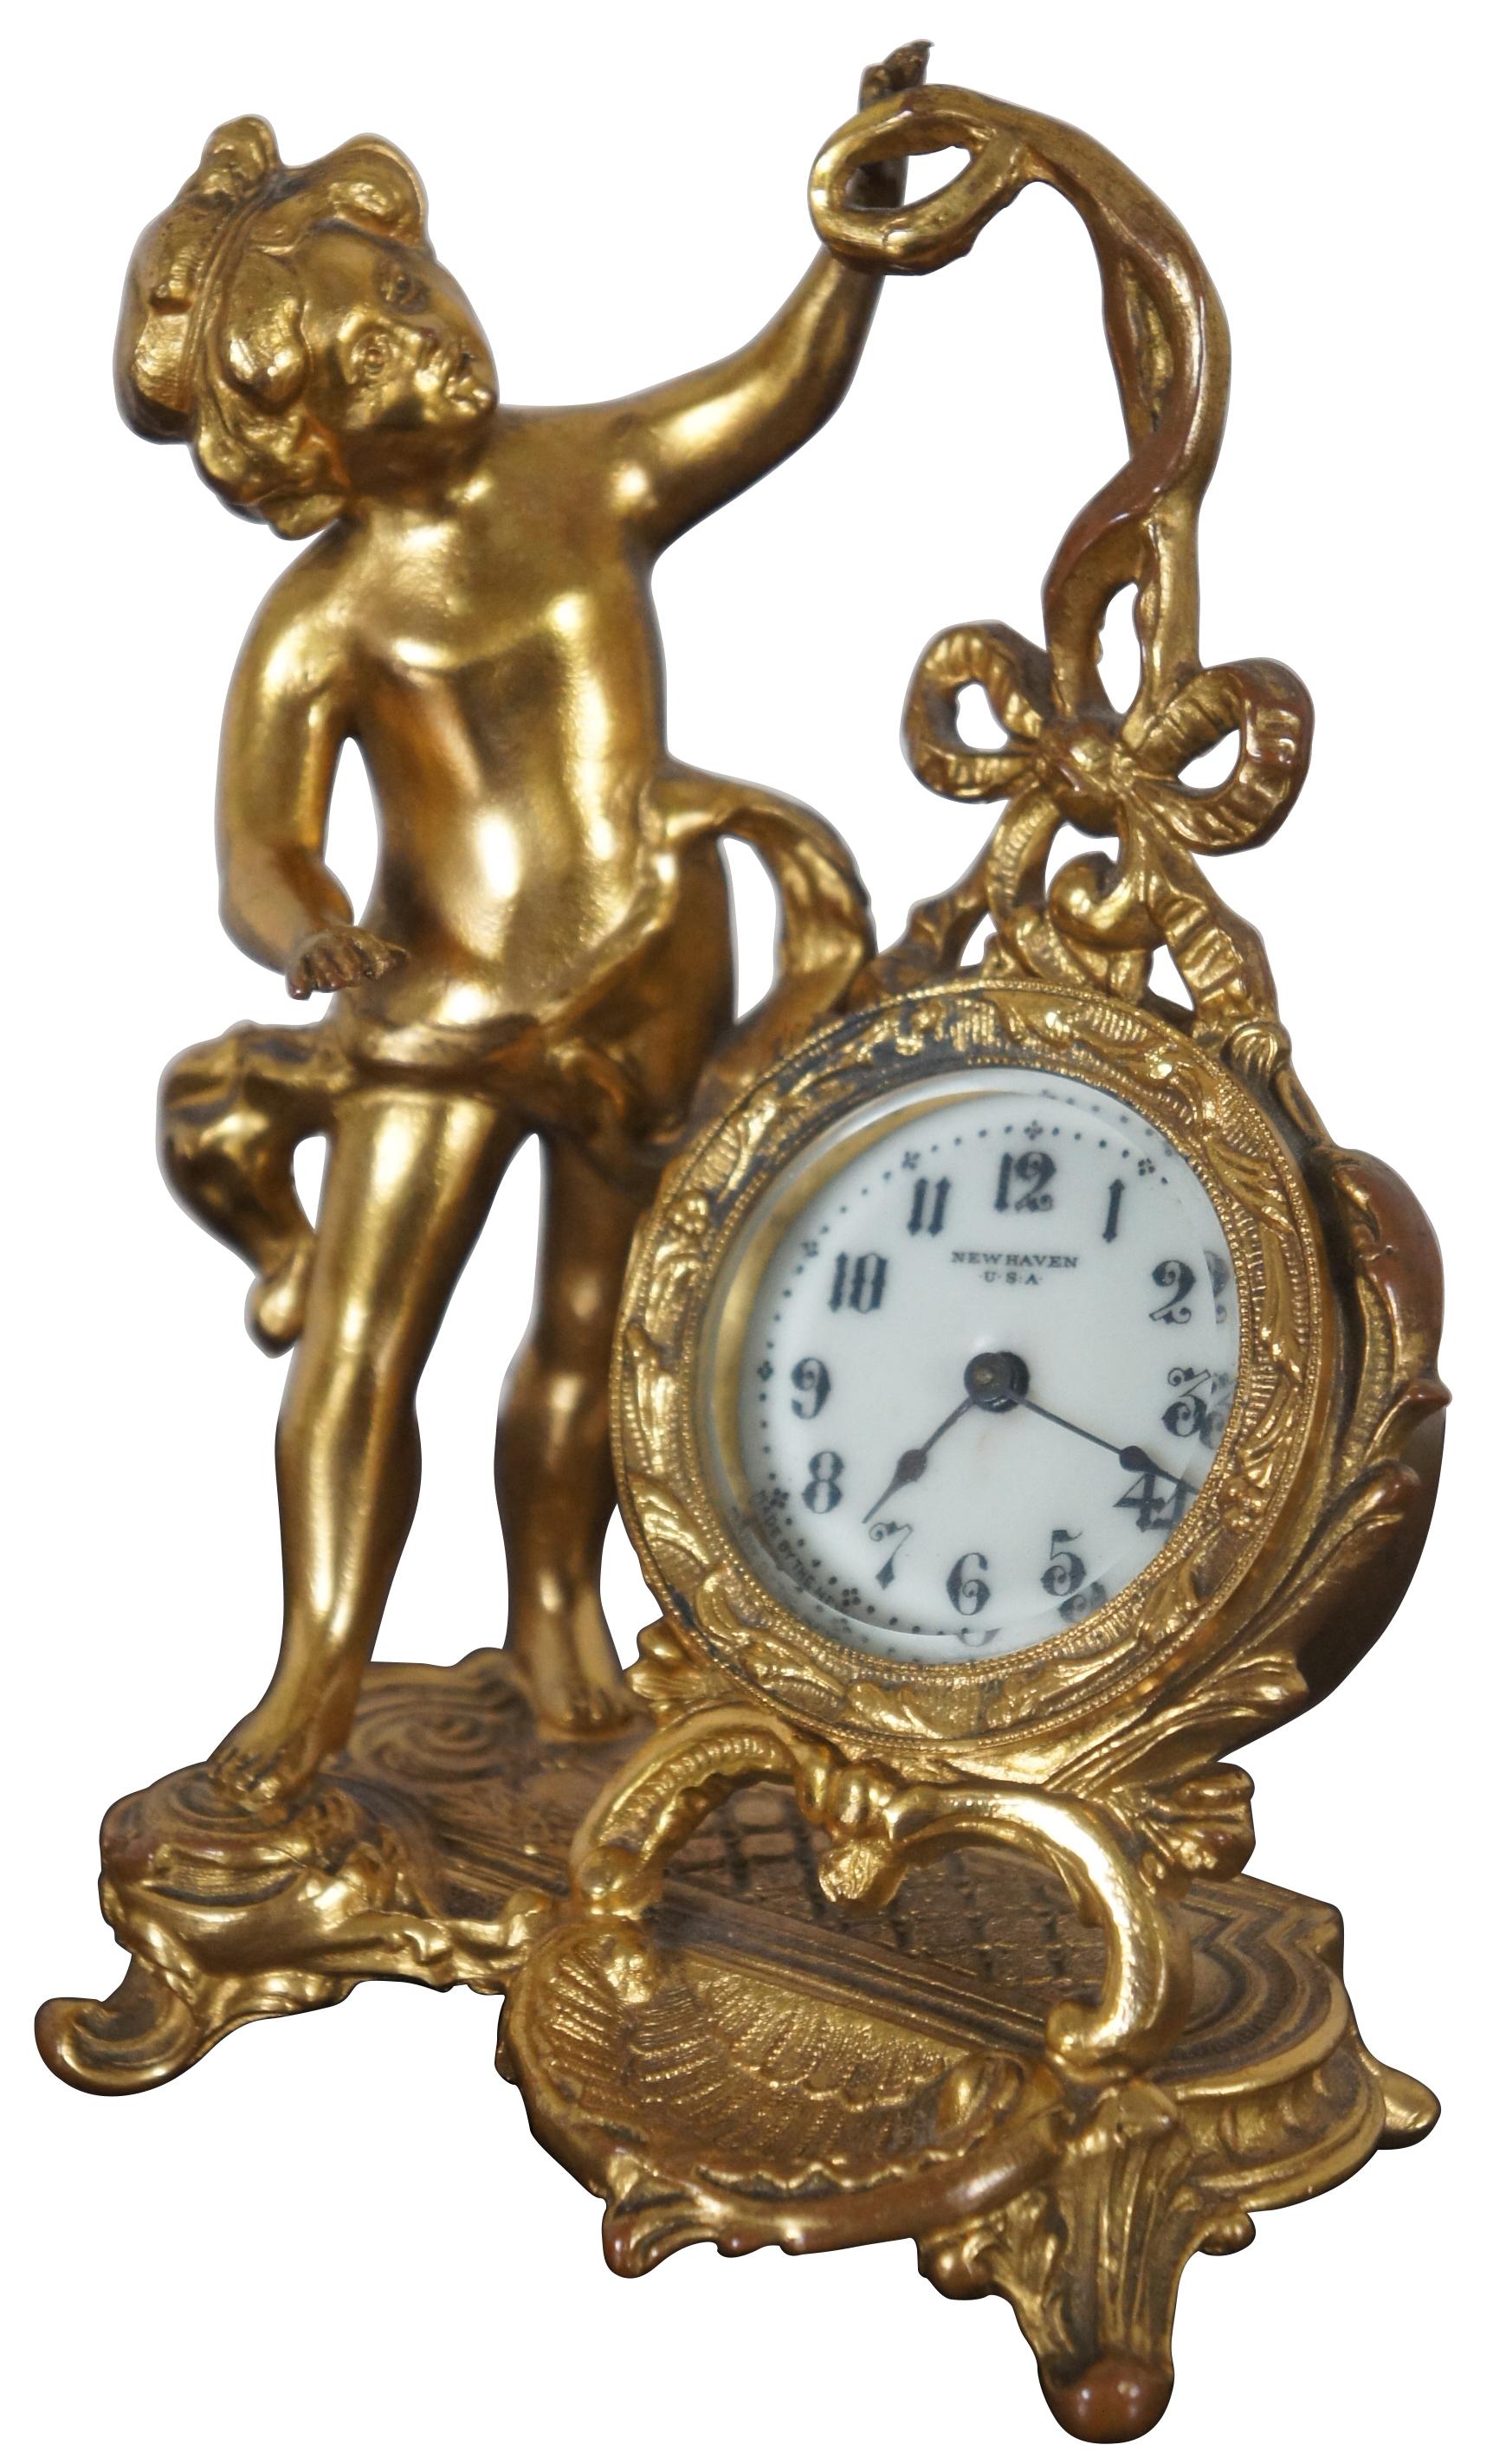 Antique Art Nouveau gilt metal cherub tabletop clock by the New Haven Clock Company.
  